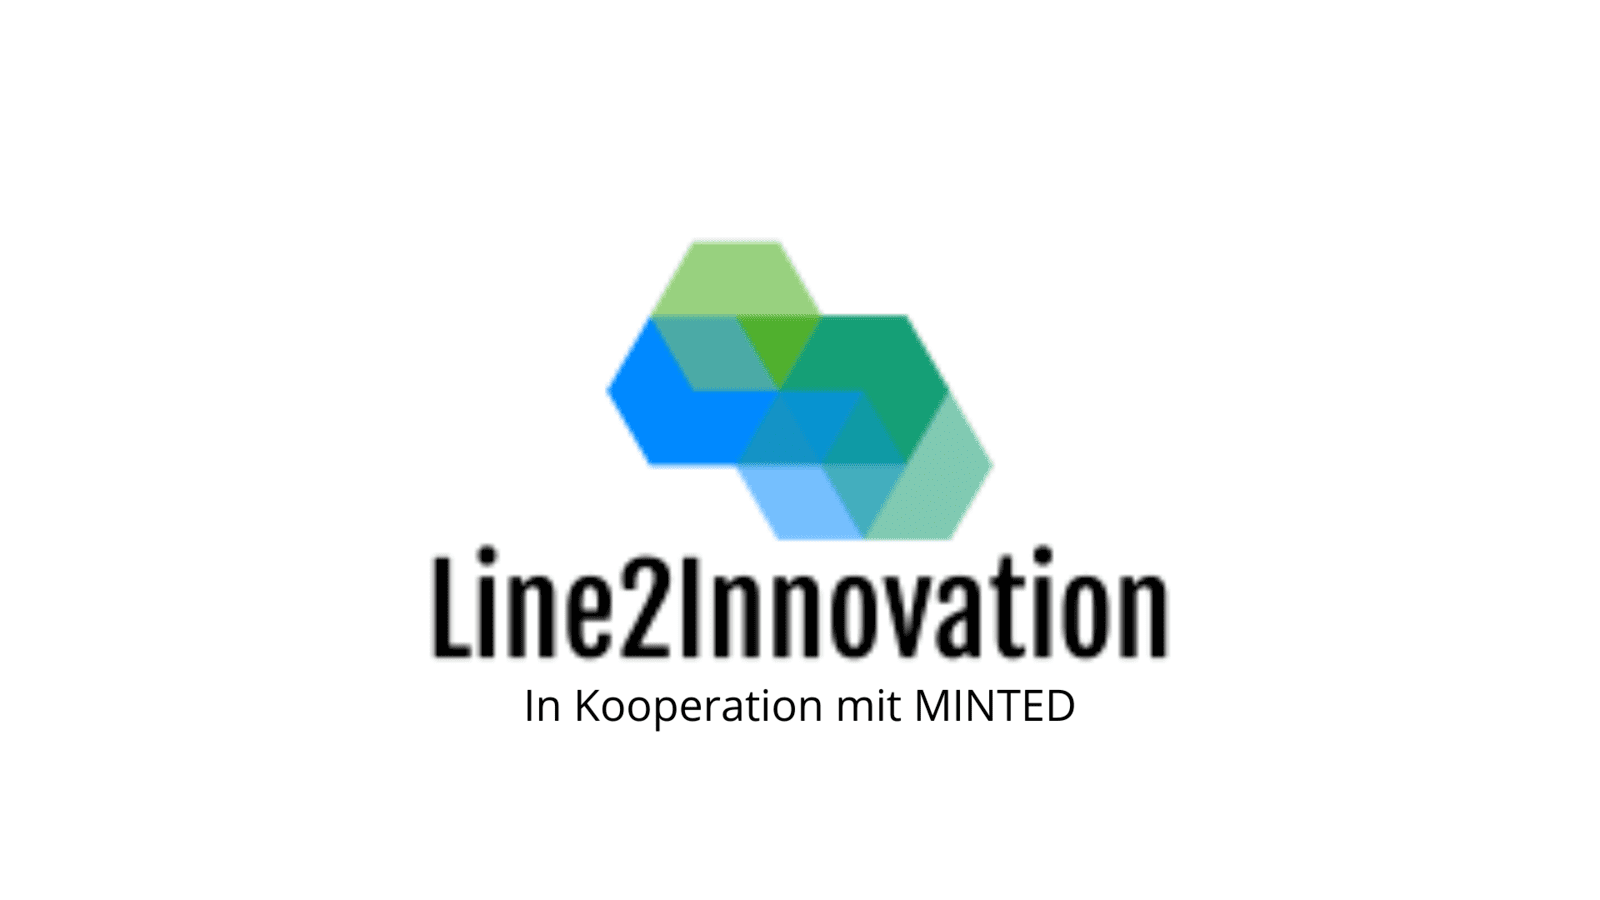 Line2Innovation